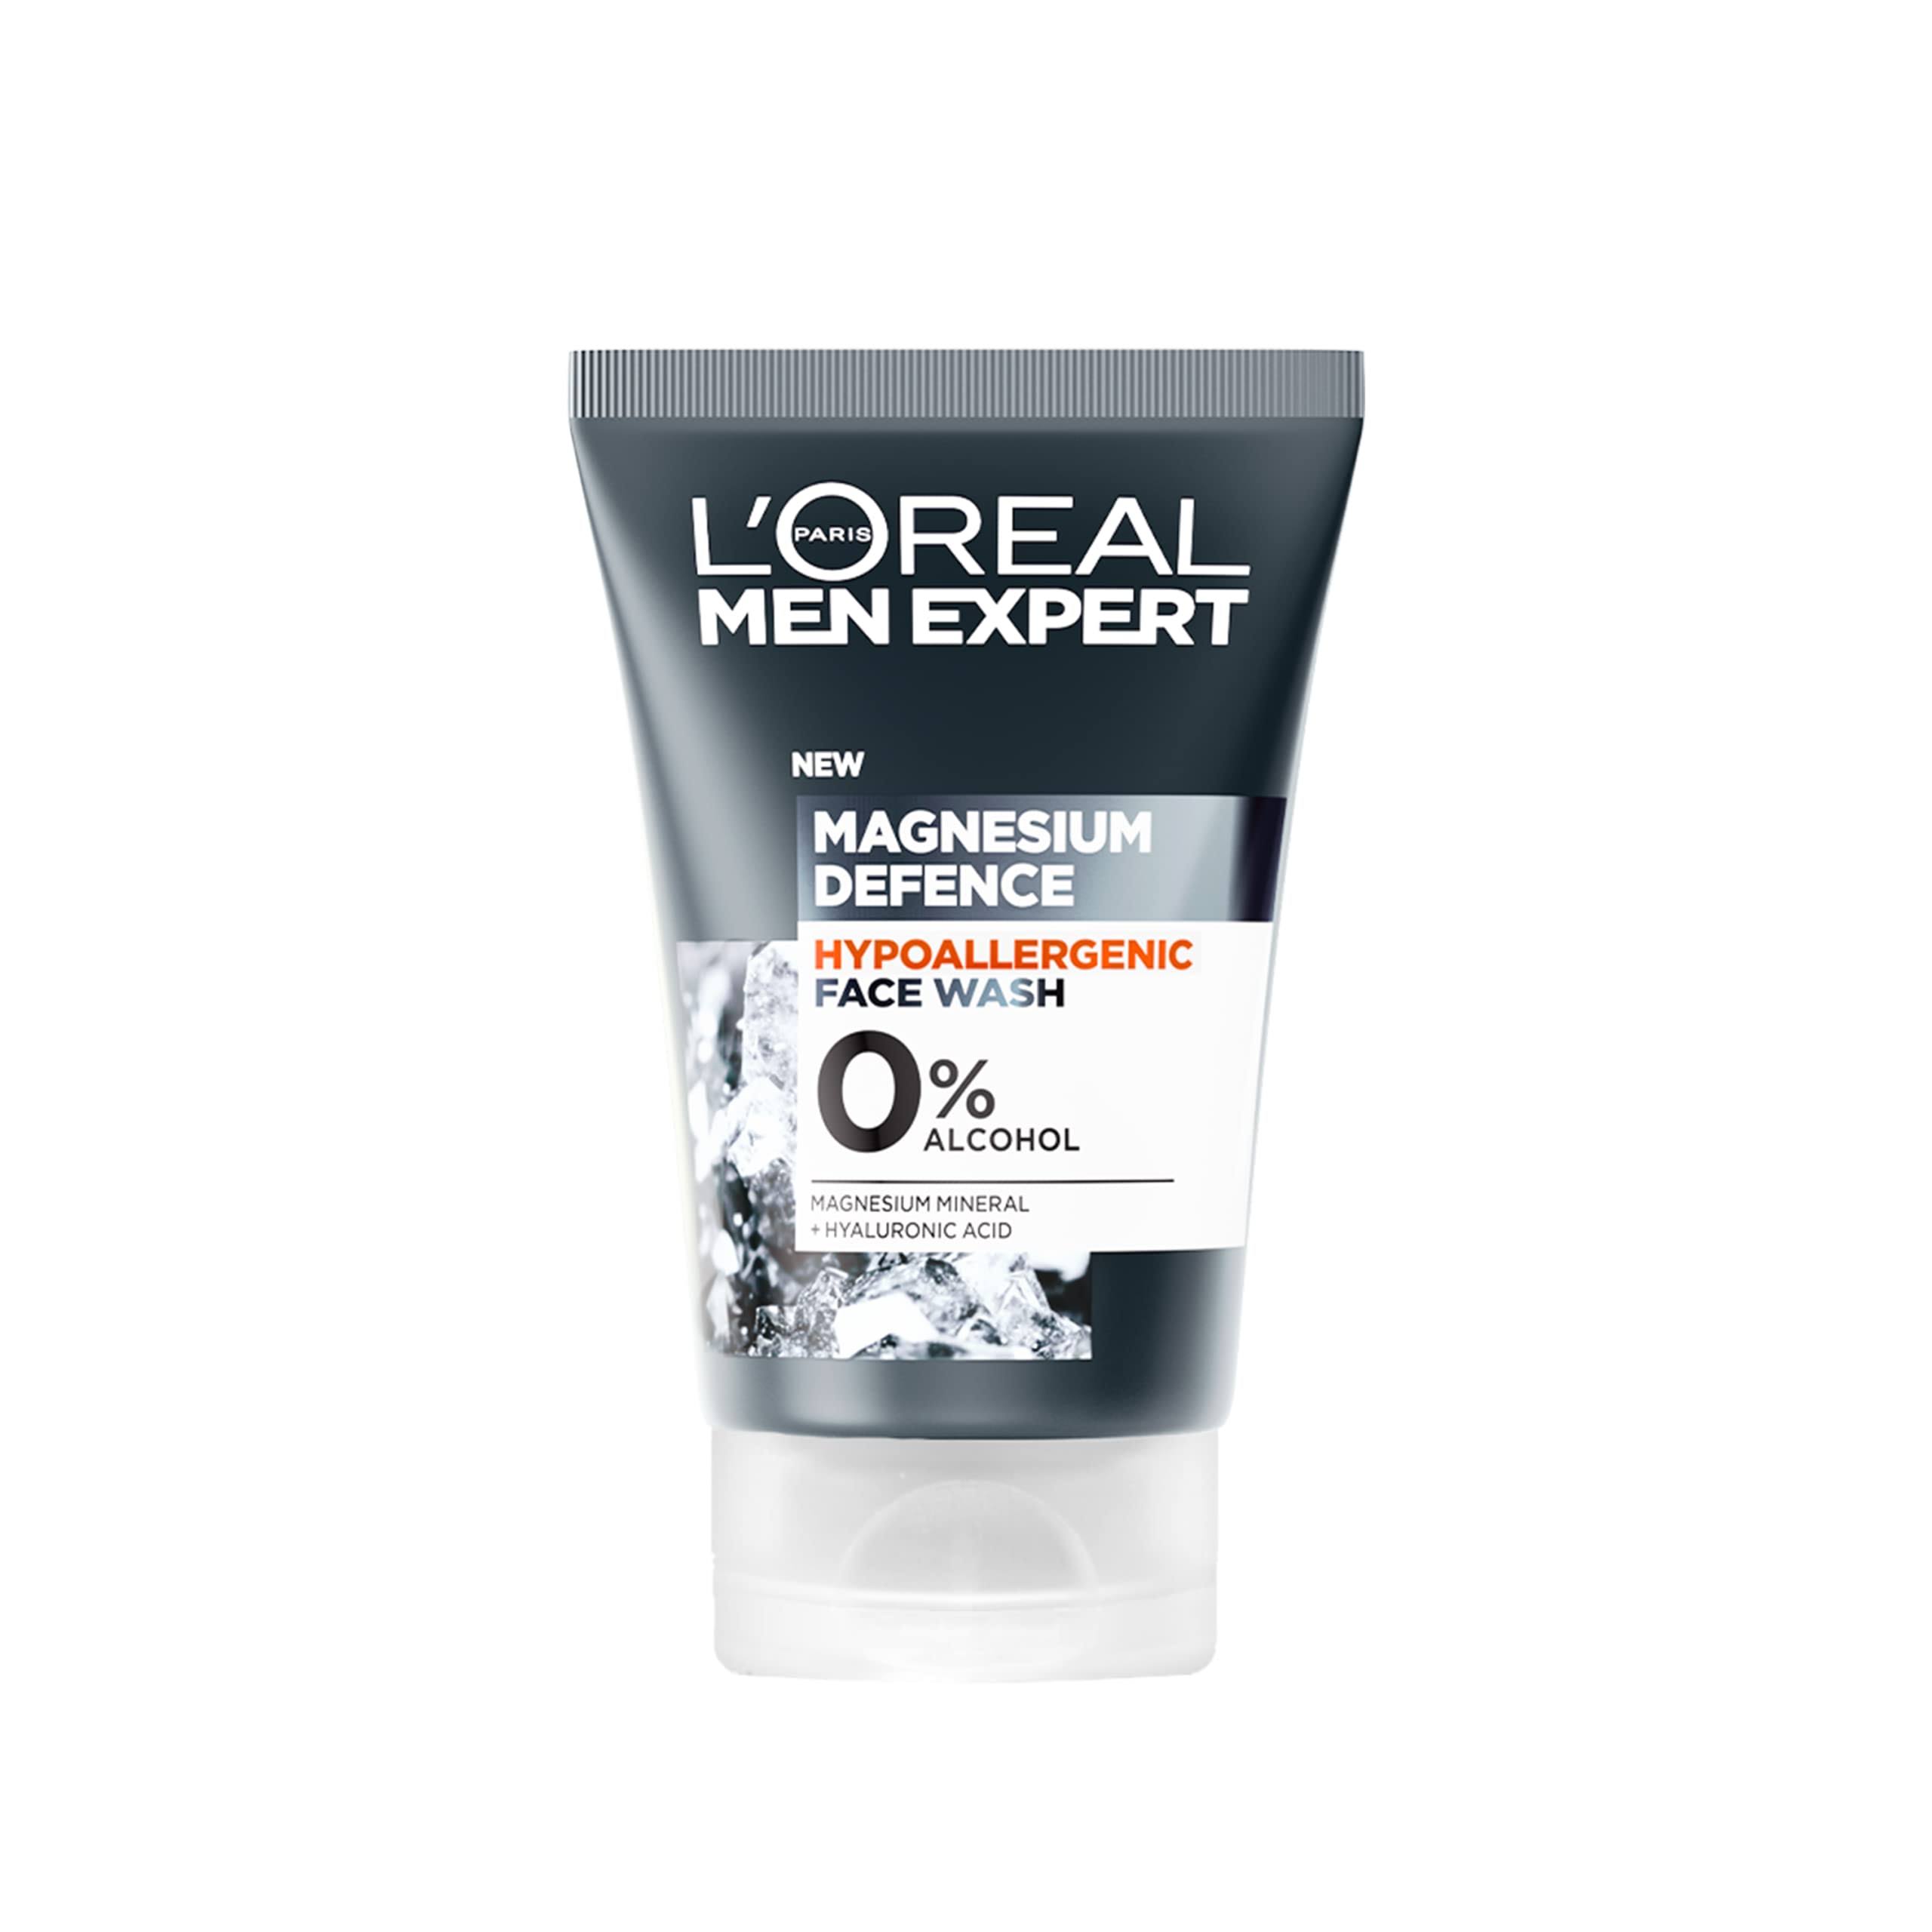 L'Oreal Men Expert Face Wash Magnesium Defence 100ml